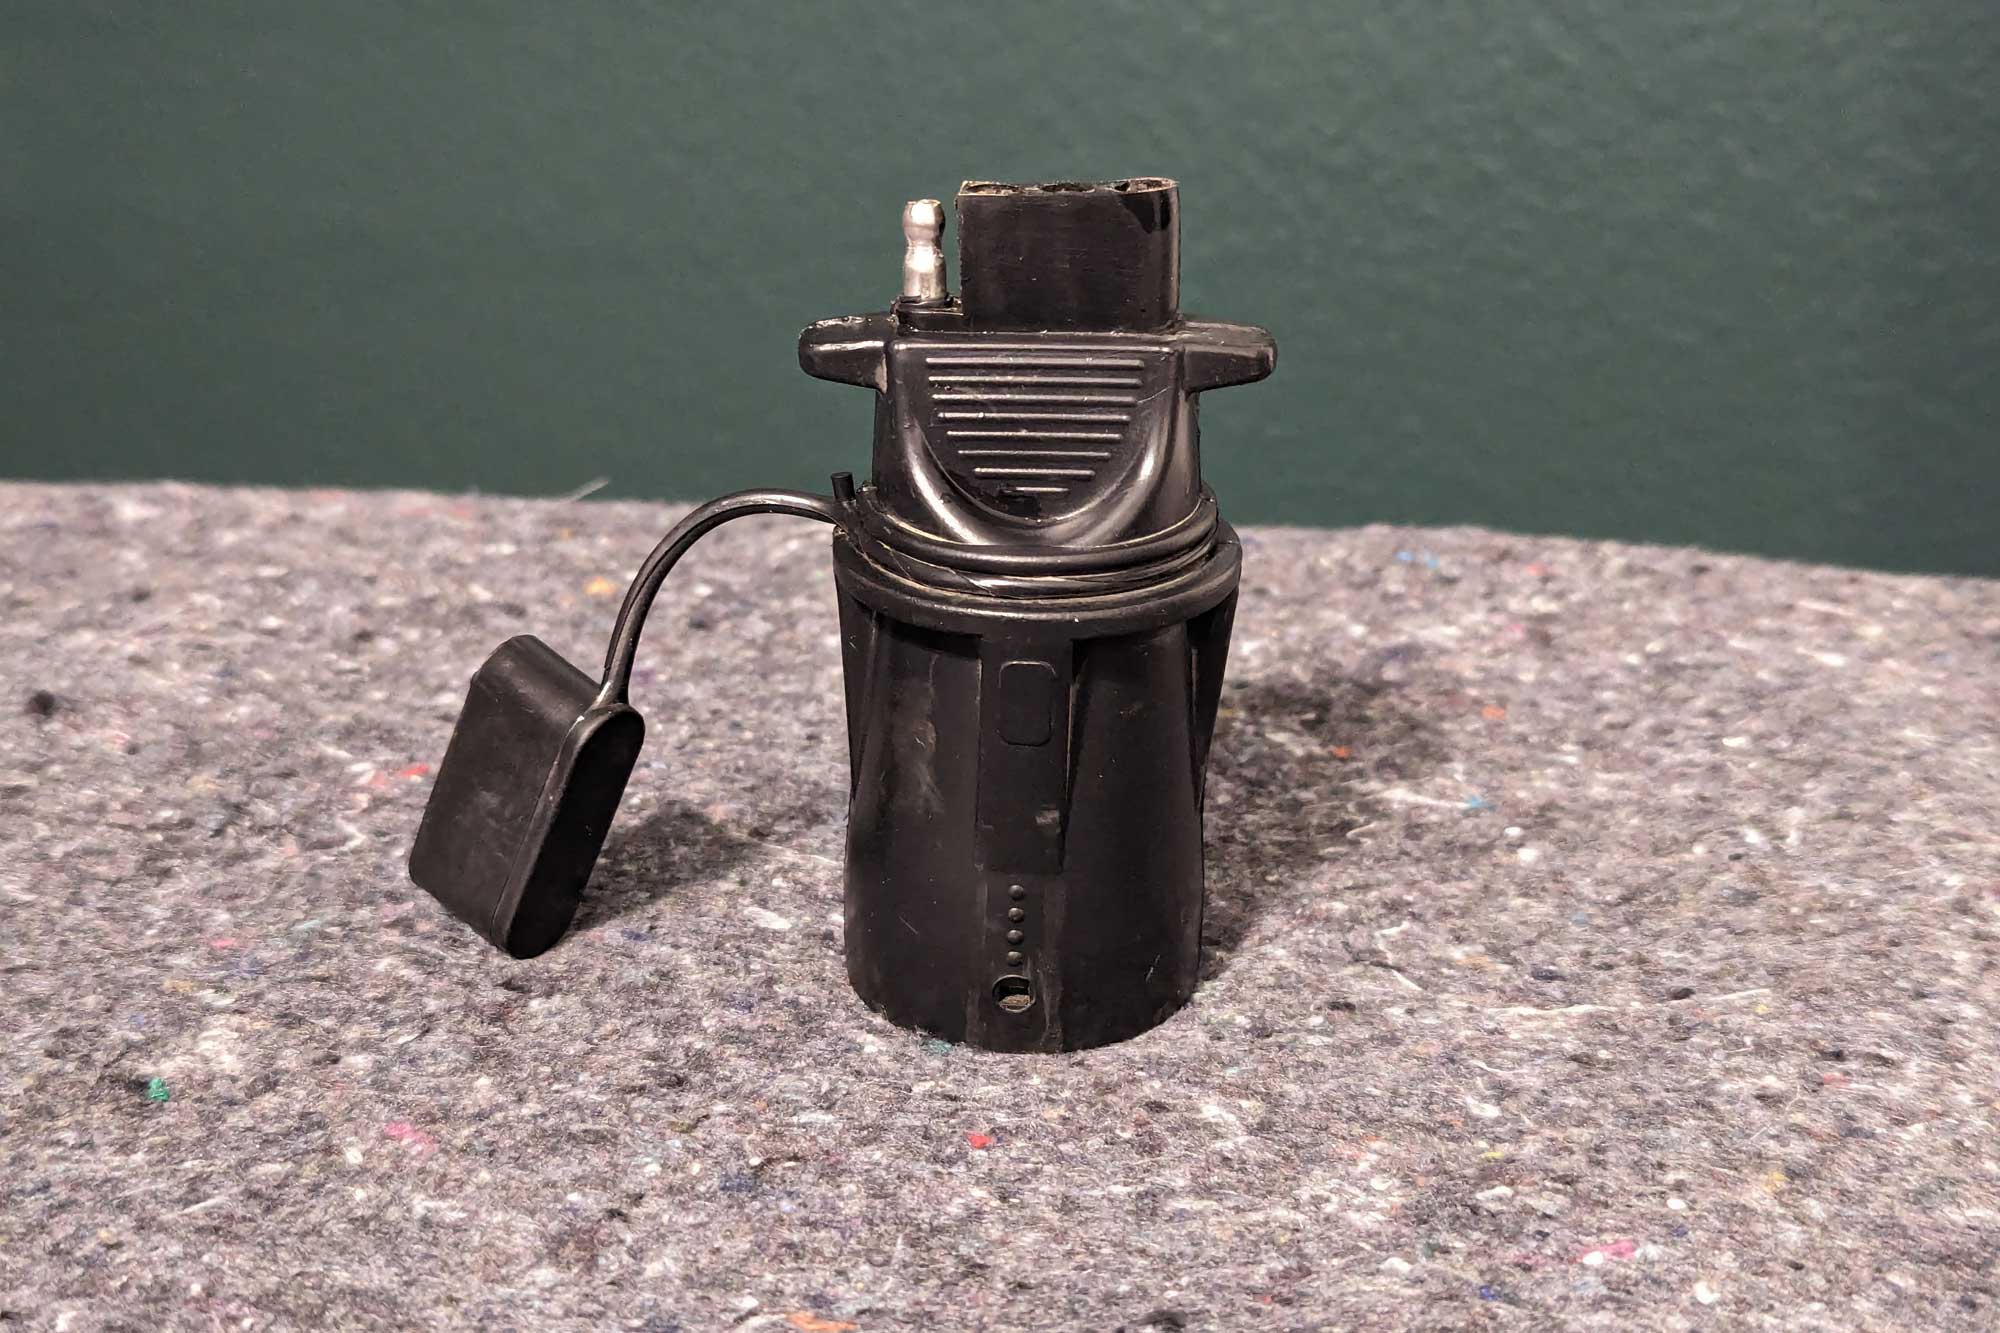 Trailer light adapter